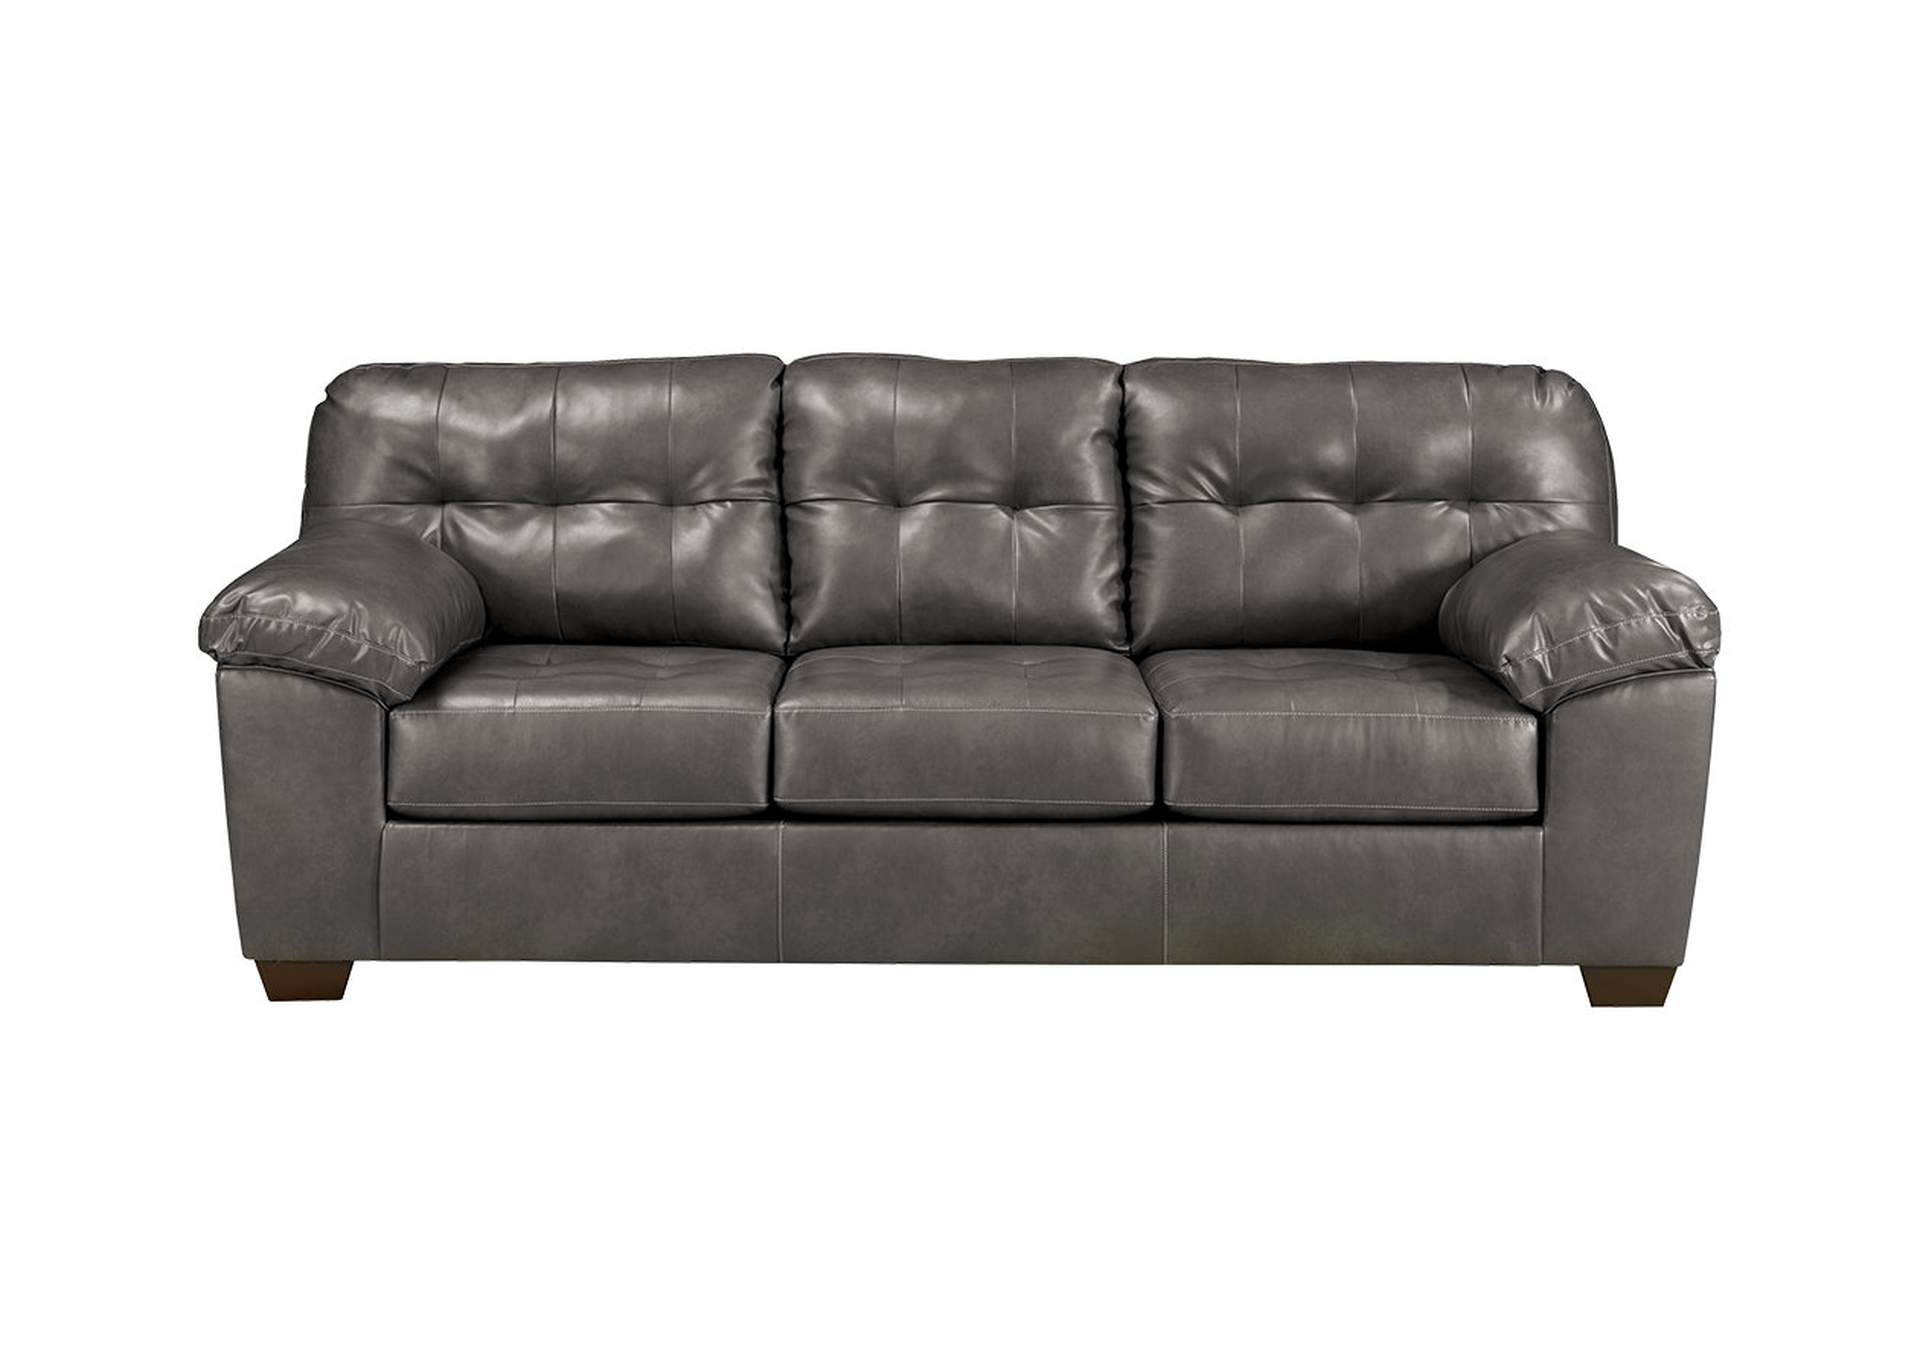 Alliston Durablend Queen Sleeper Sofa, Ashley Furniture Leather Sectional Sleeper Sofa